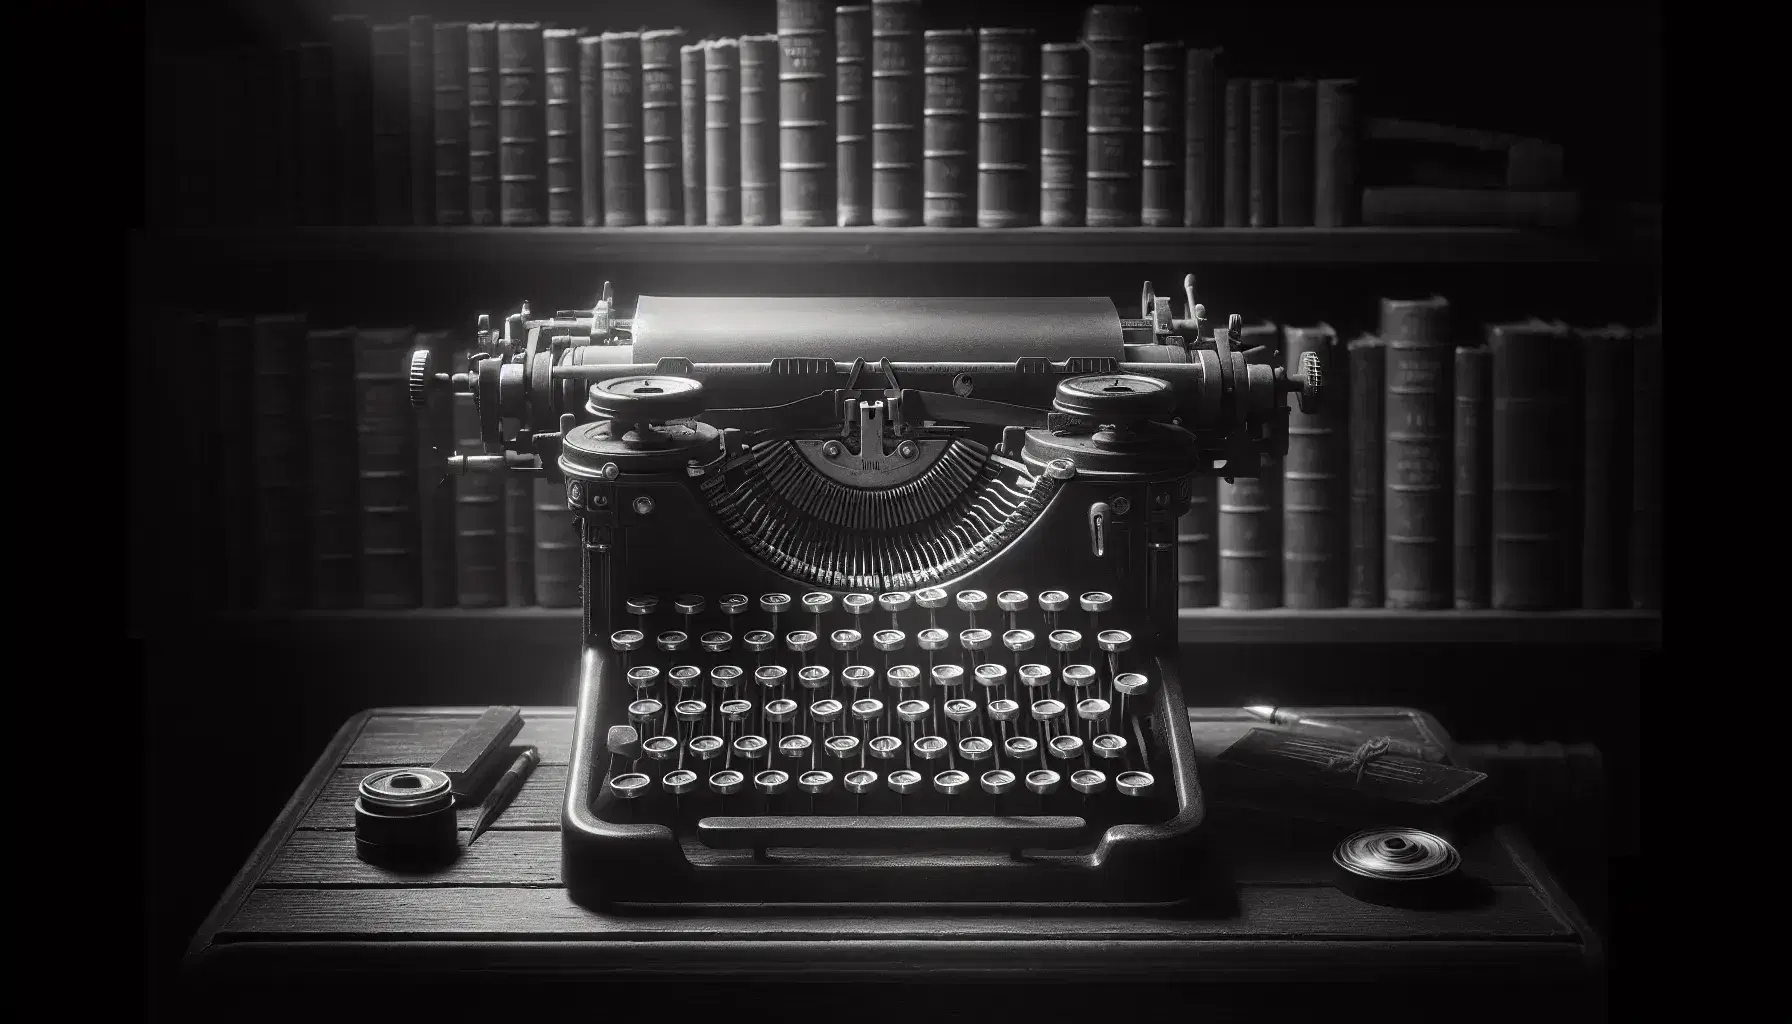 Máquina de escribir antigua con teclas redondas en blanco y negro sobre mesa de madera oscura, con estantería desenfocada al fondo.